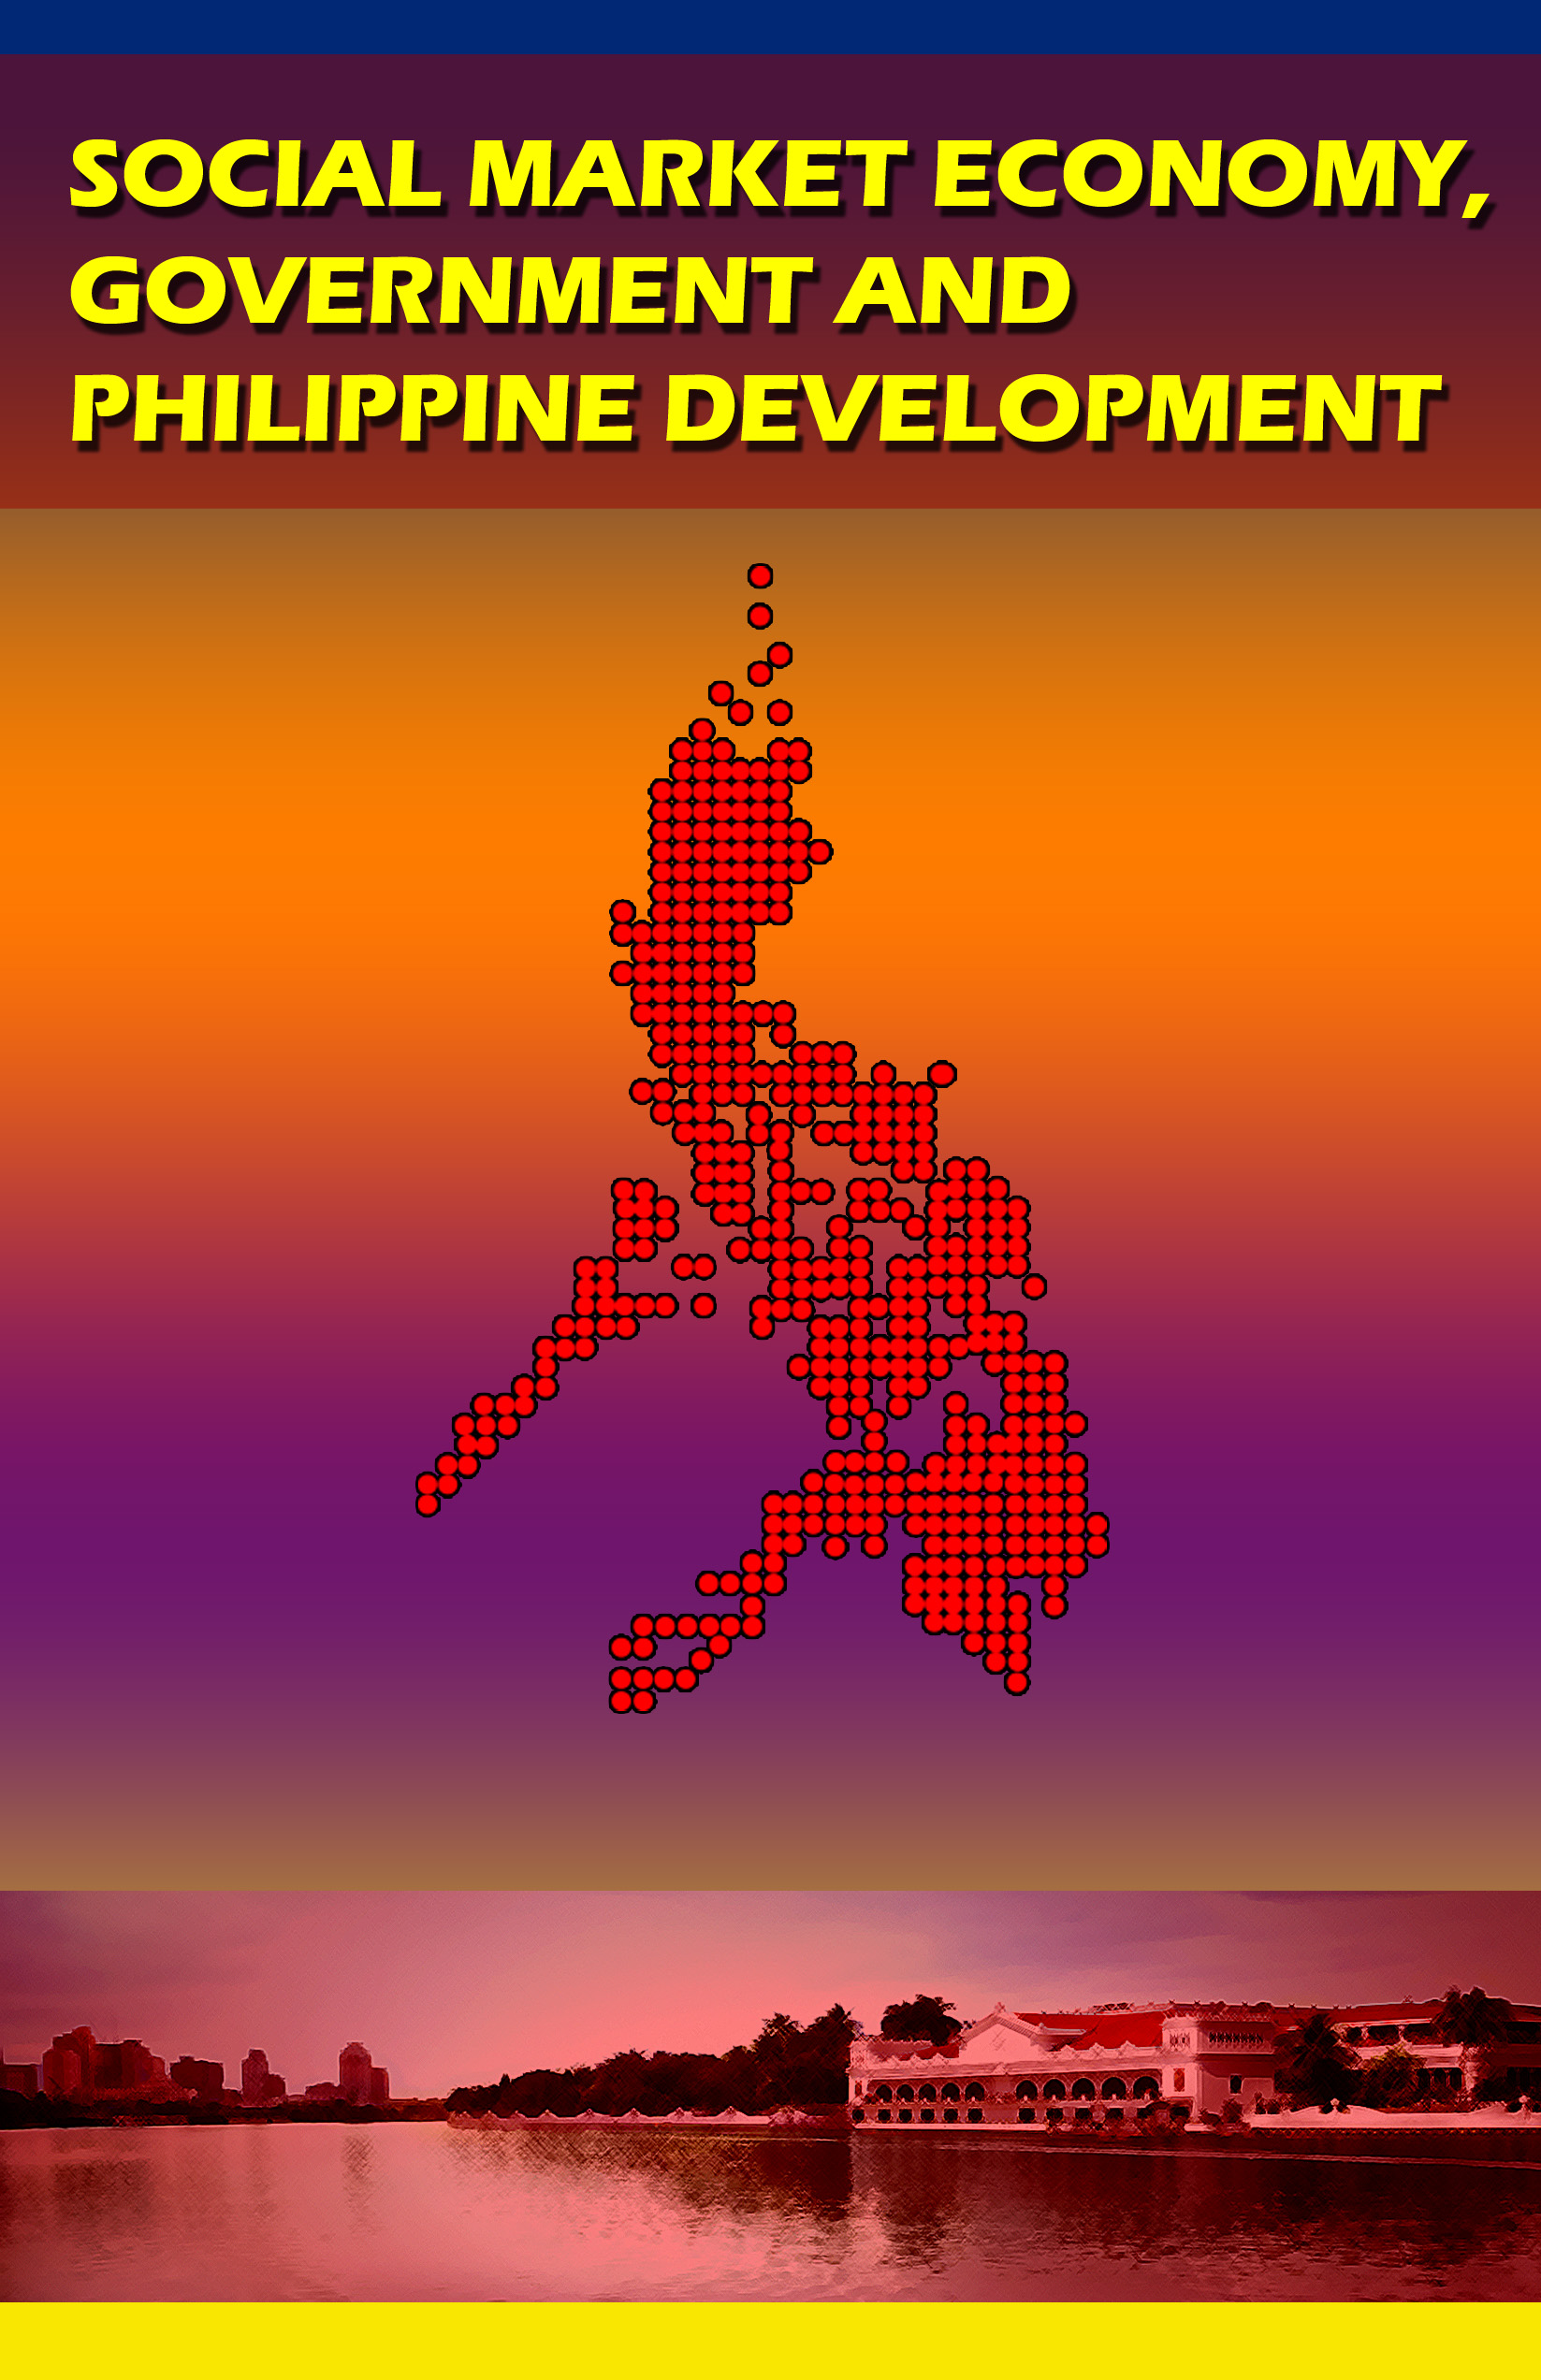 SOCIAL MARKET ECONOMY, GOVERNMENT AND PHILIPPINE DEVELOPMENT